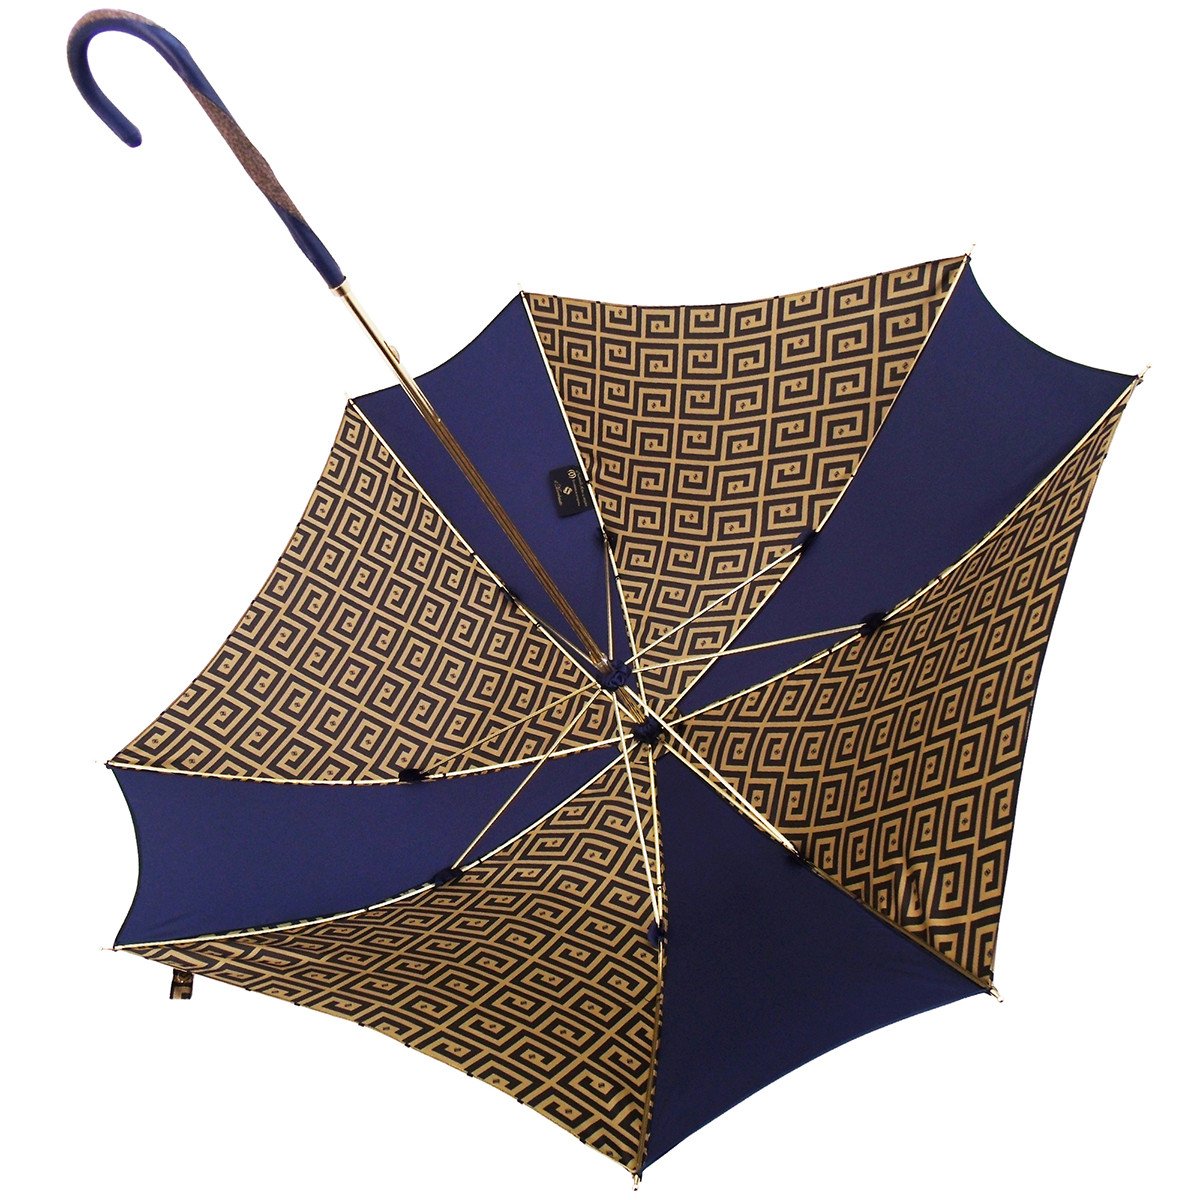 Original Handcrafted Umbrella with golden Greek design - il-marchesato